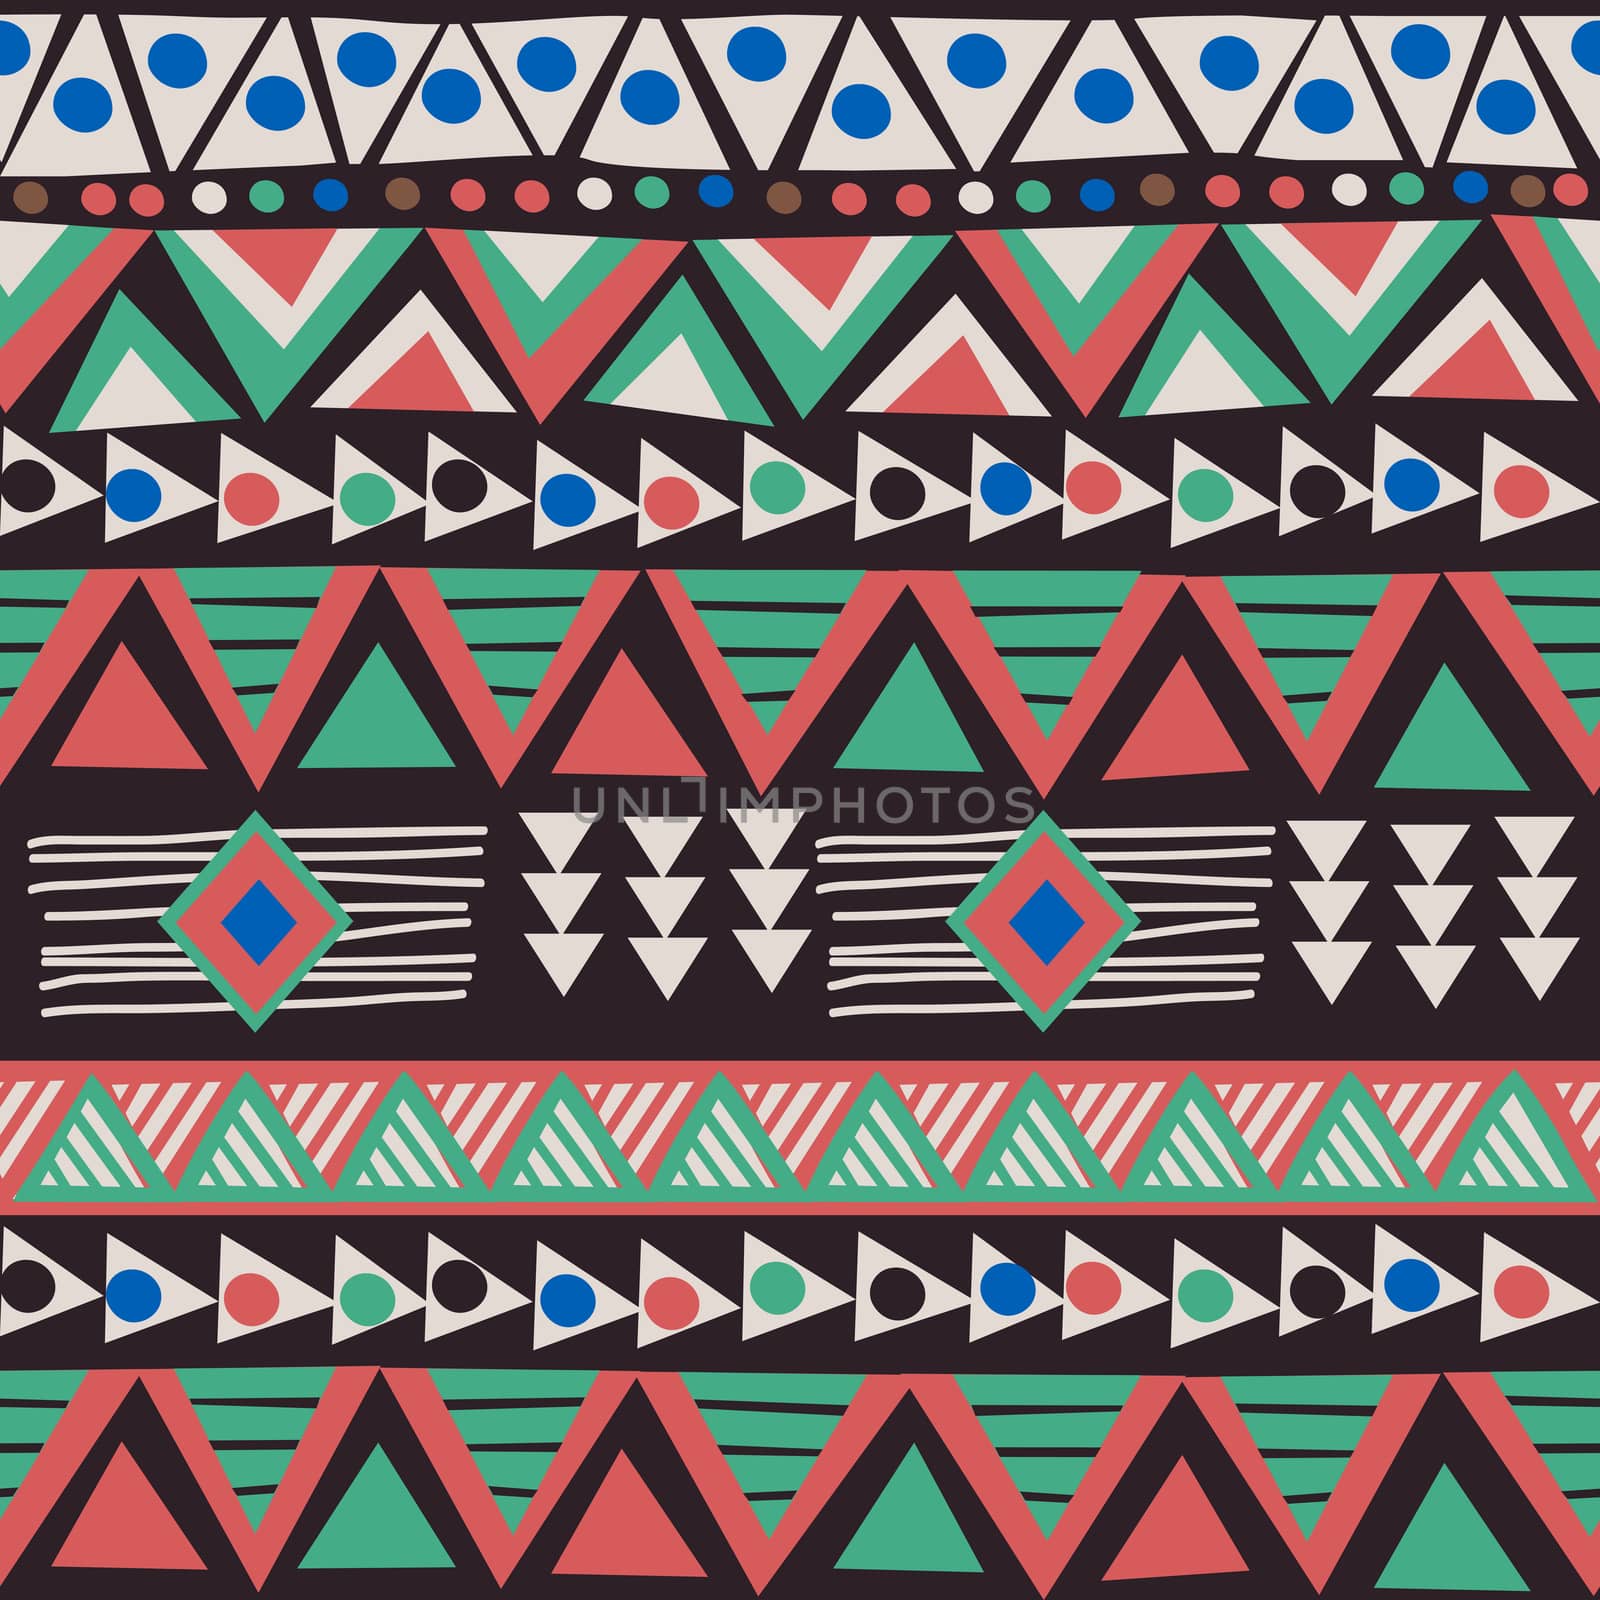 African ethnic motifs background